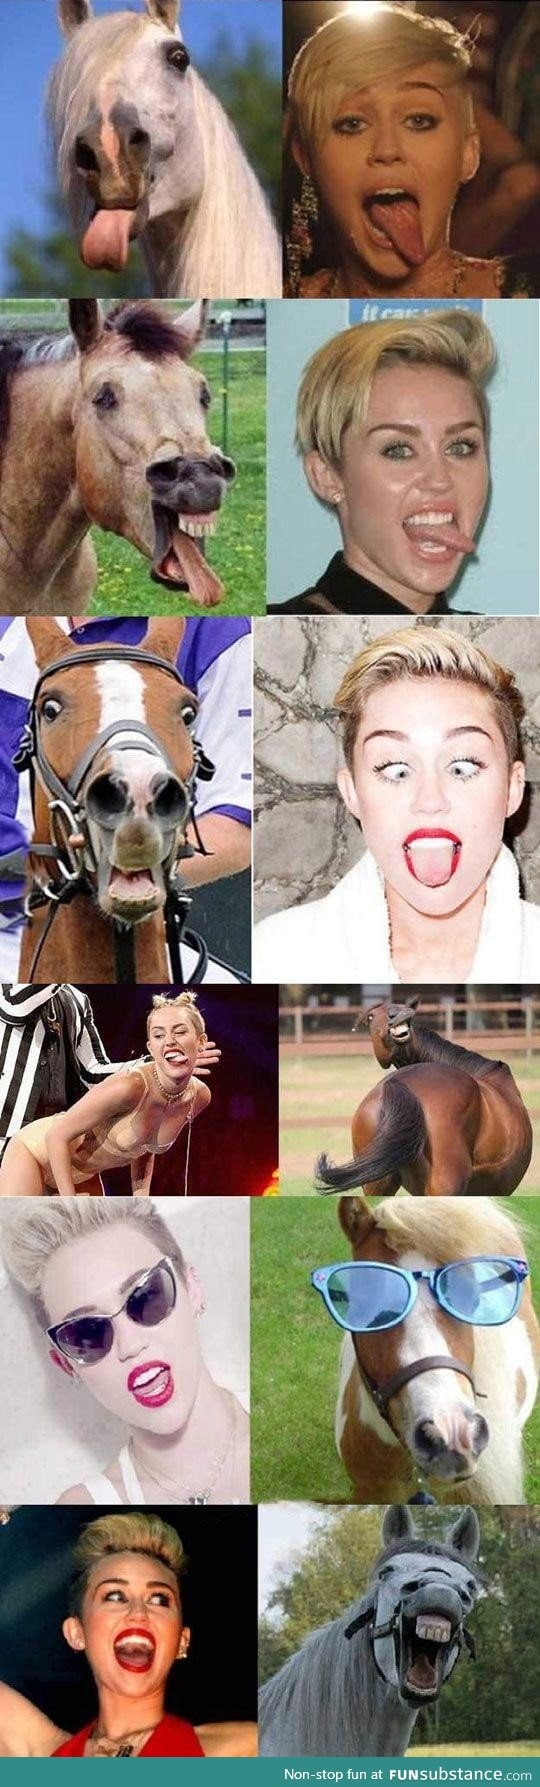 Miley vs Horse